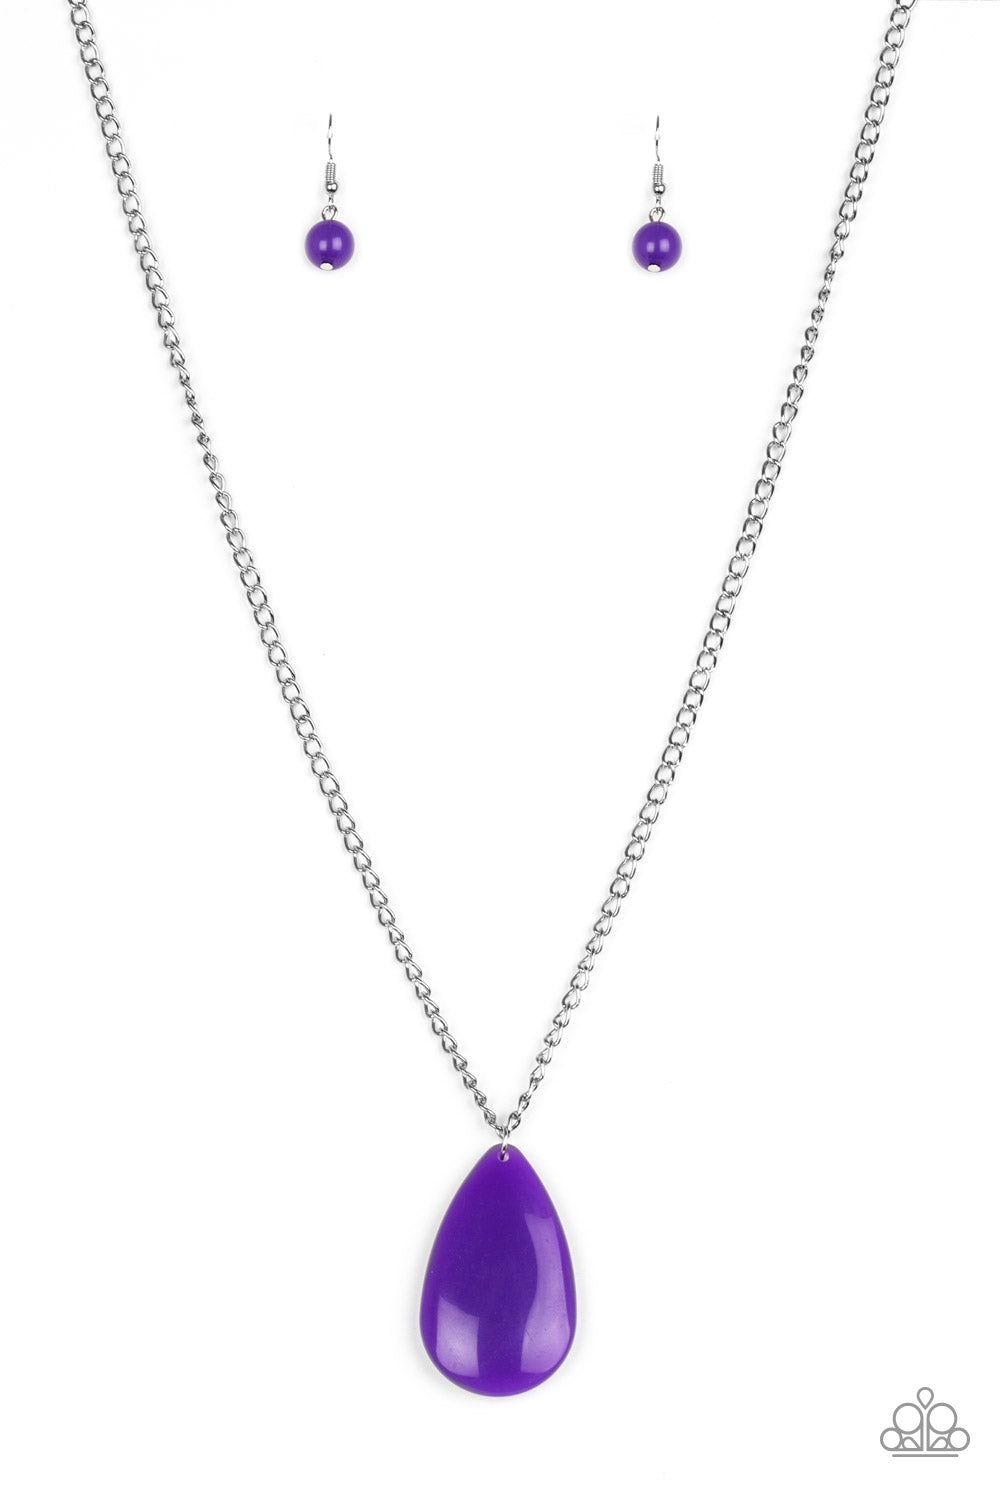 So Pop-YOU-lar - Purple Necklace